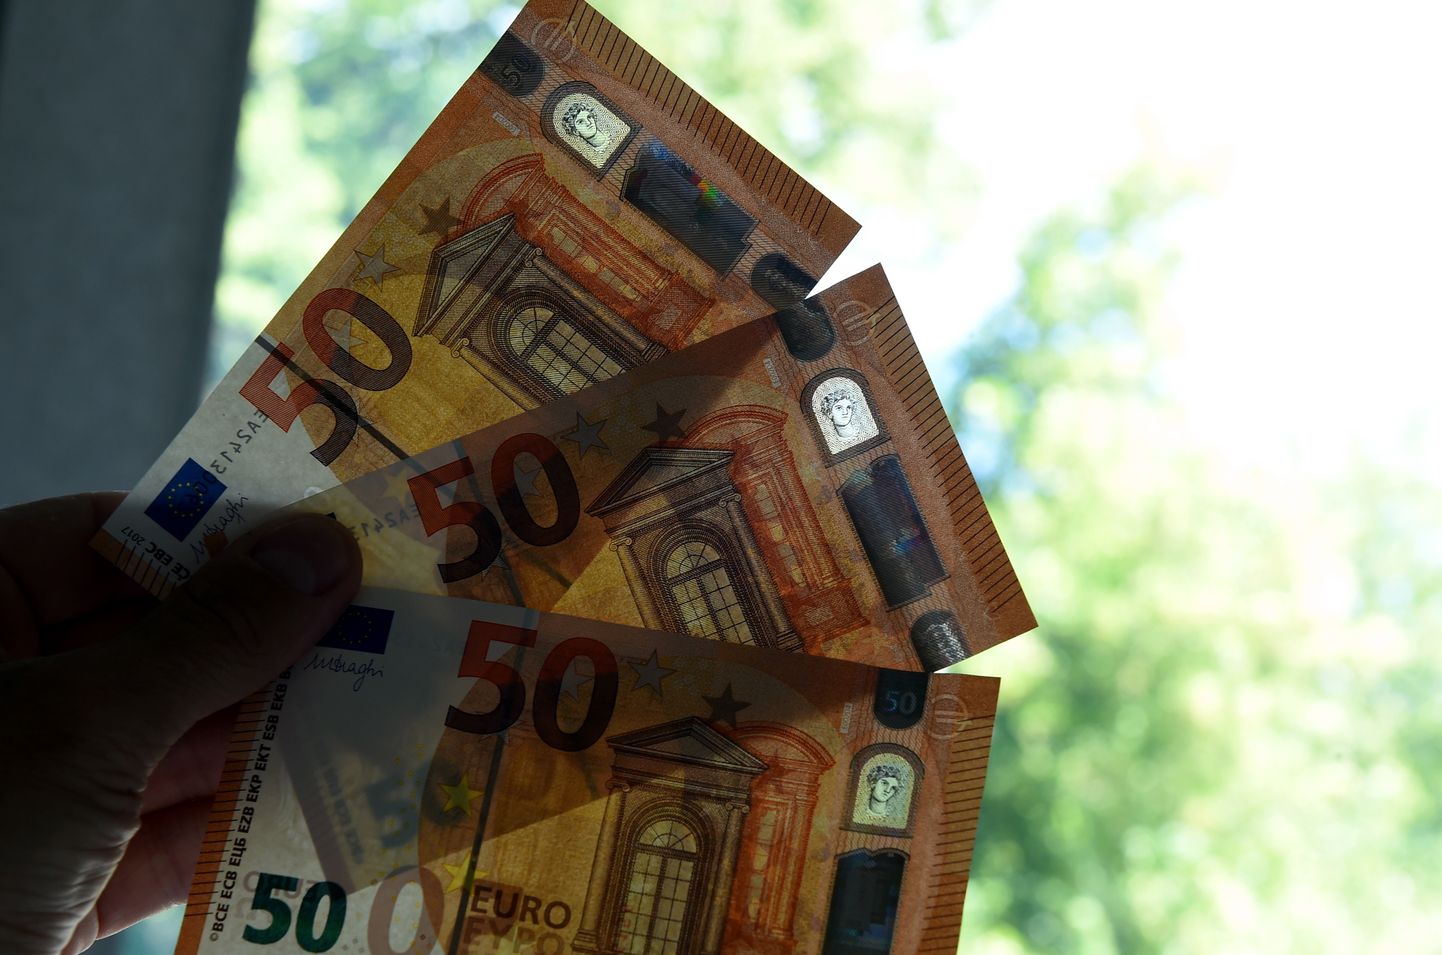 50 eiro banknotes.